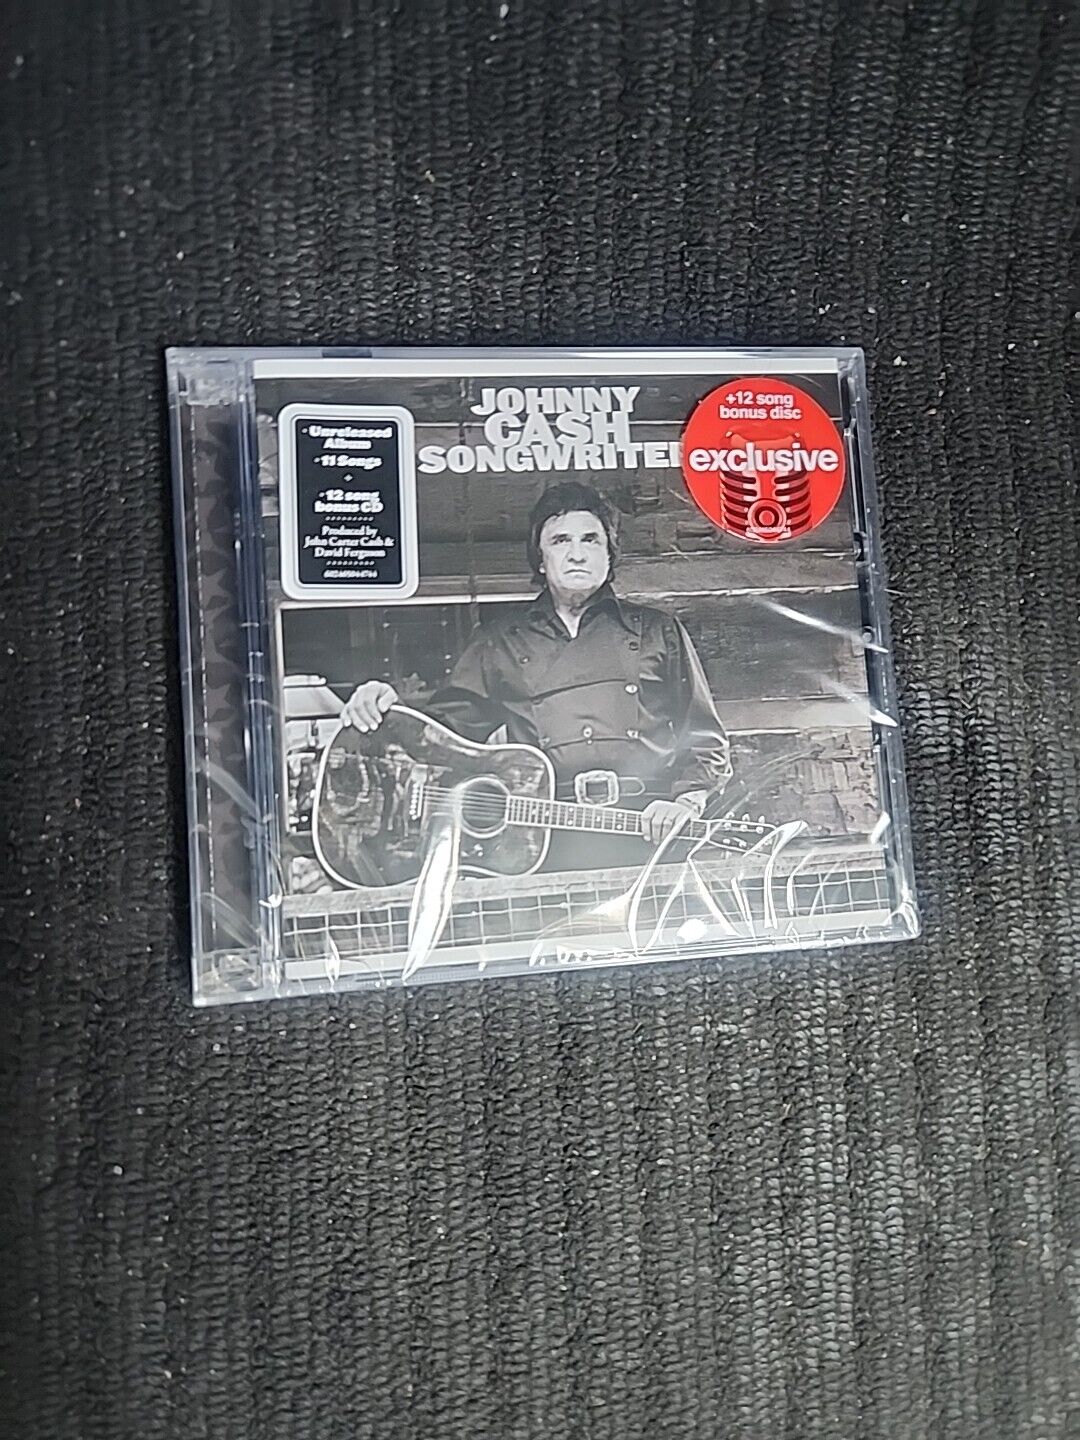 JOHNNY CASH SONGWRITER CD + 12 Song BONUS DISC  Target Exclusive ~ 